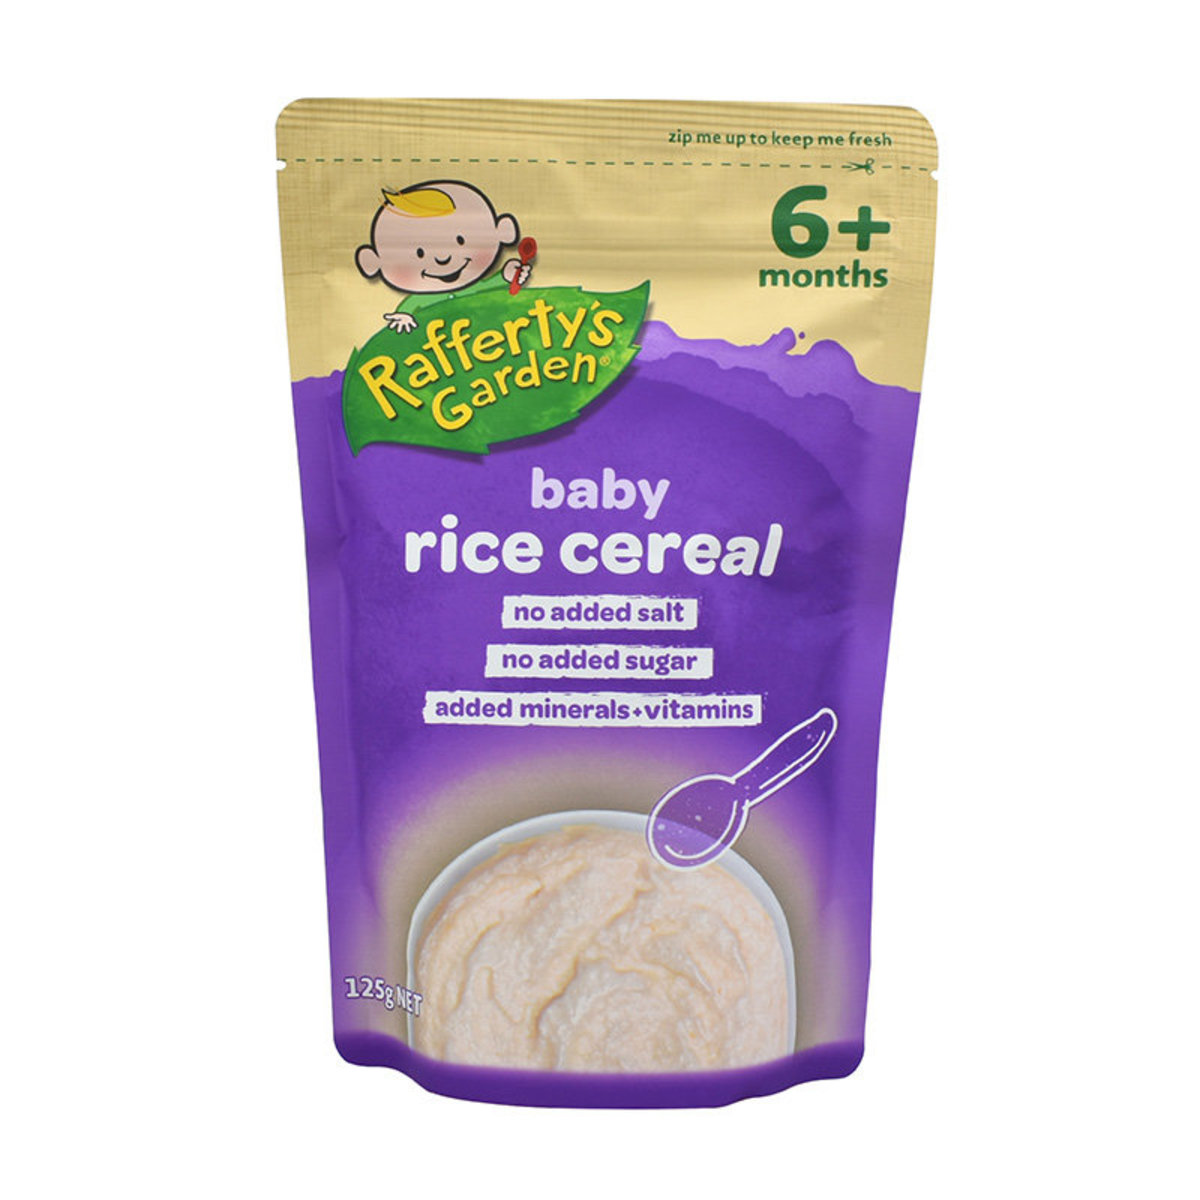 rafferty's rice cereal